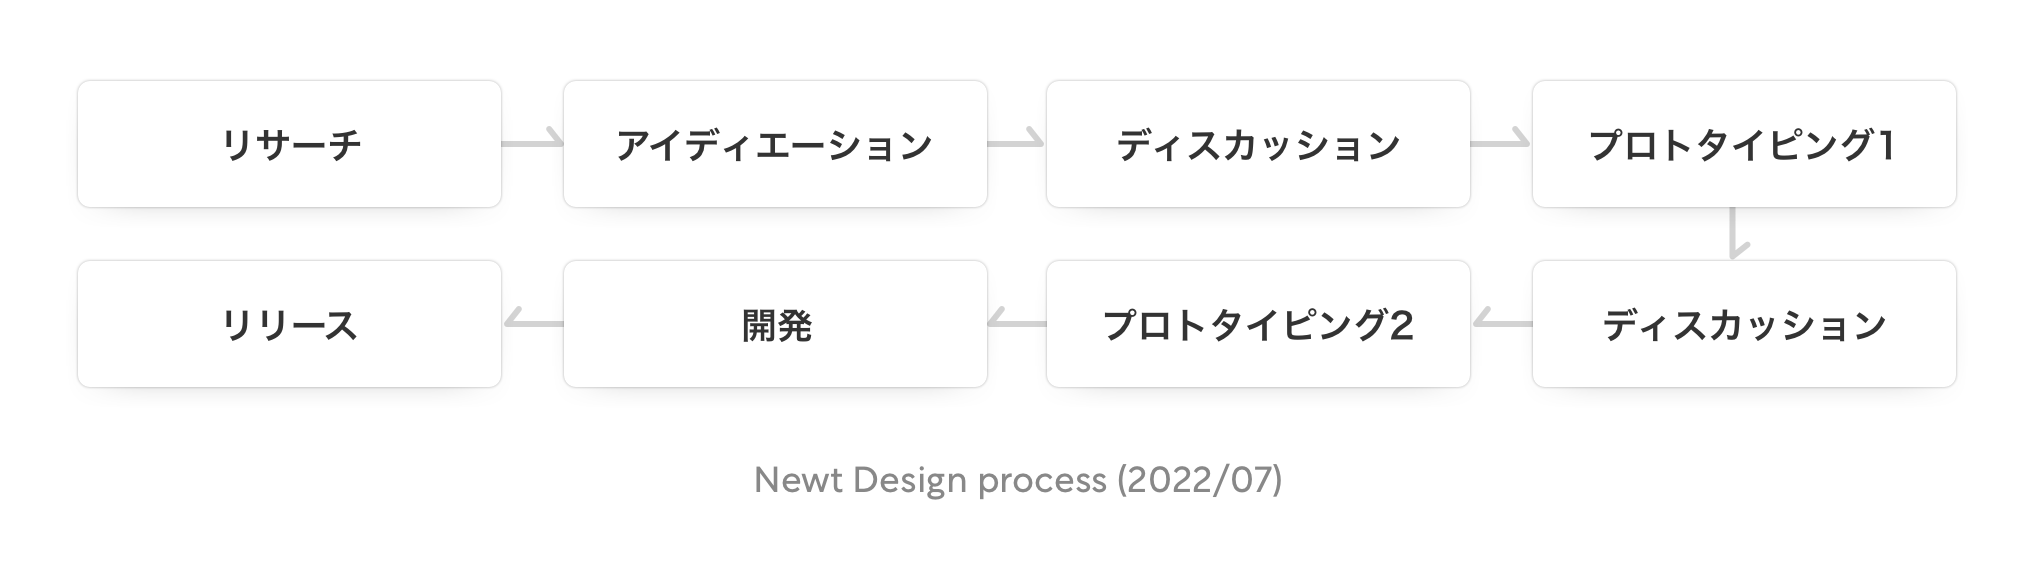 Newt Design process (2022/07)